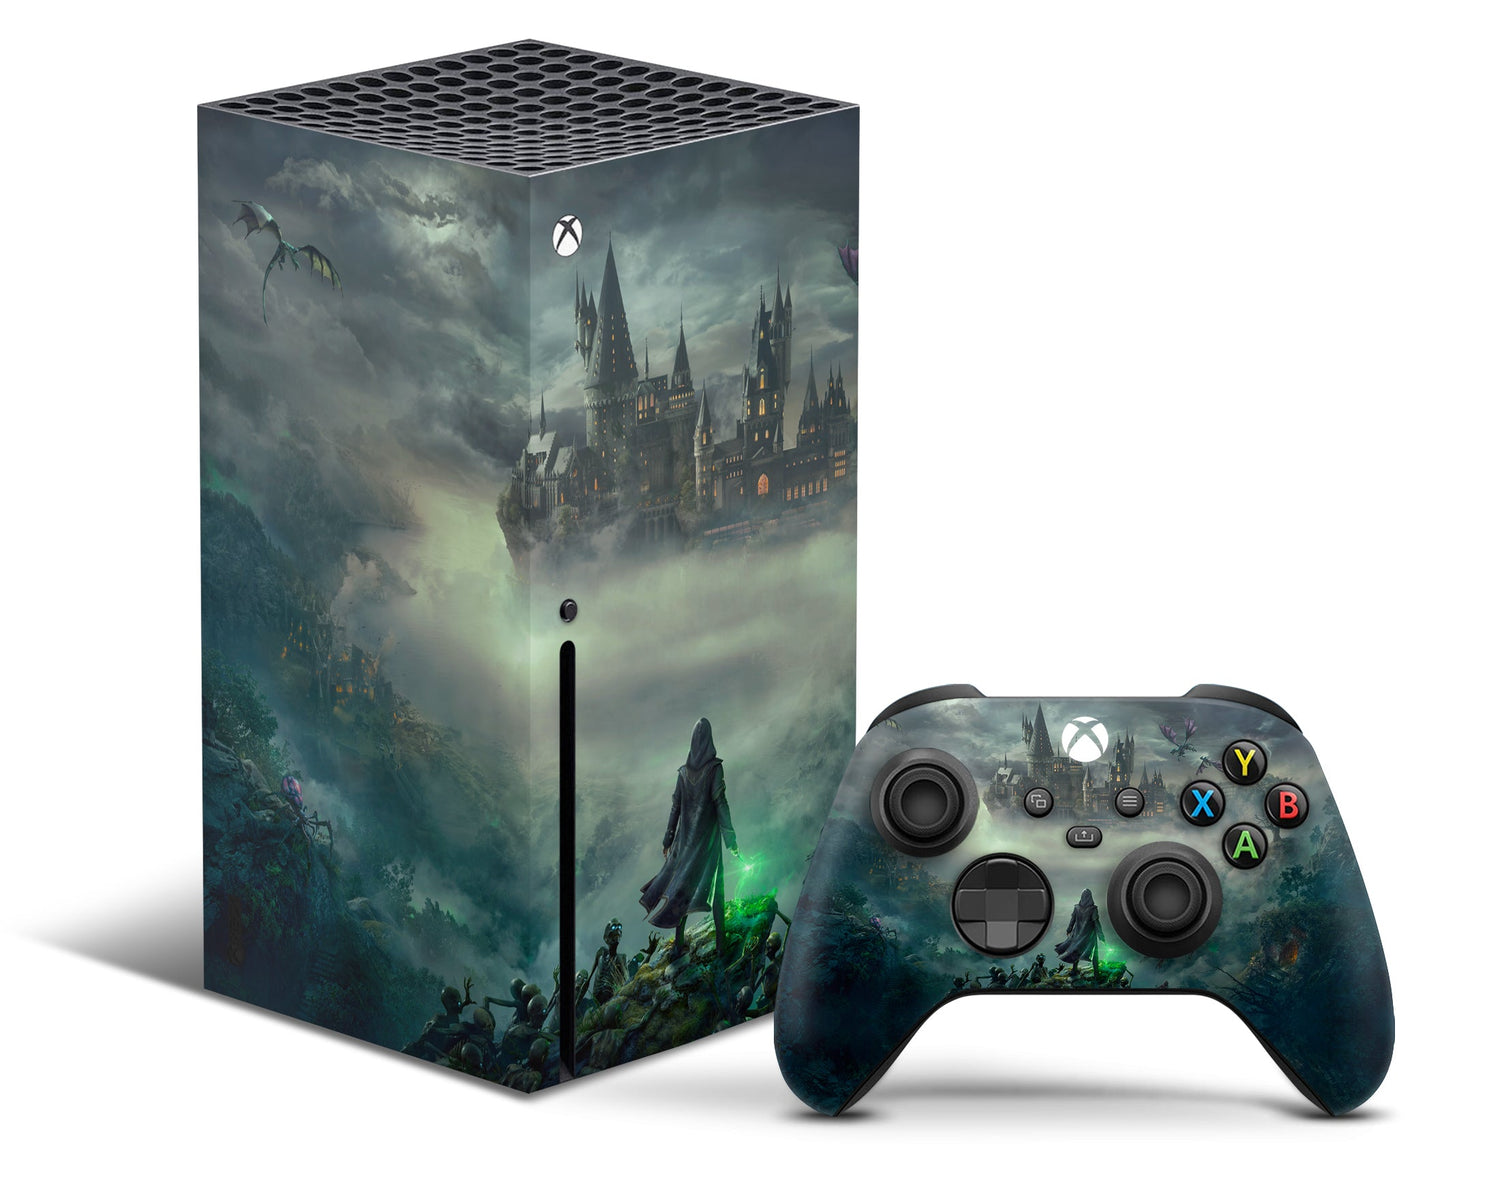 Xbox Series X Hogwarts Legacy - Standard Edition — GAMELINE